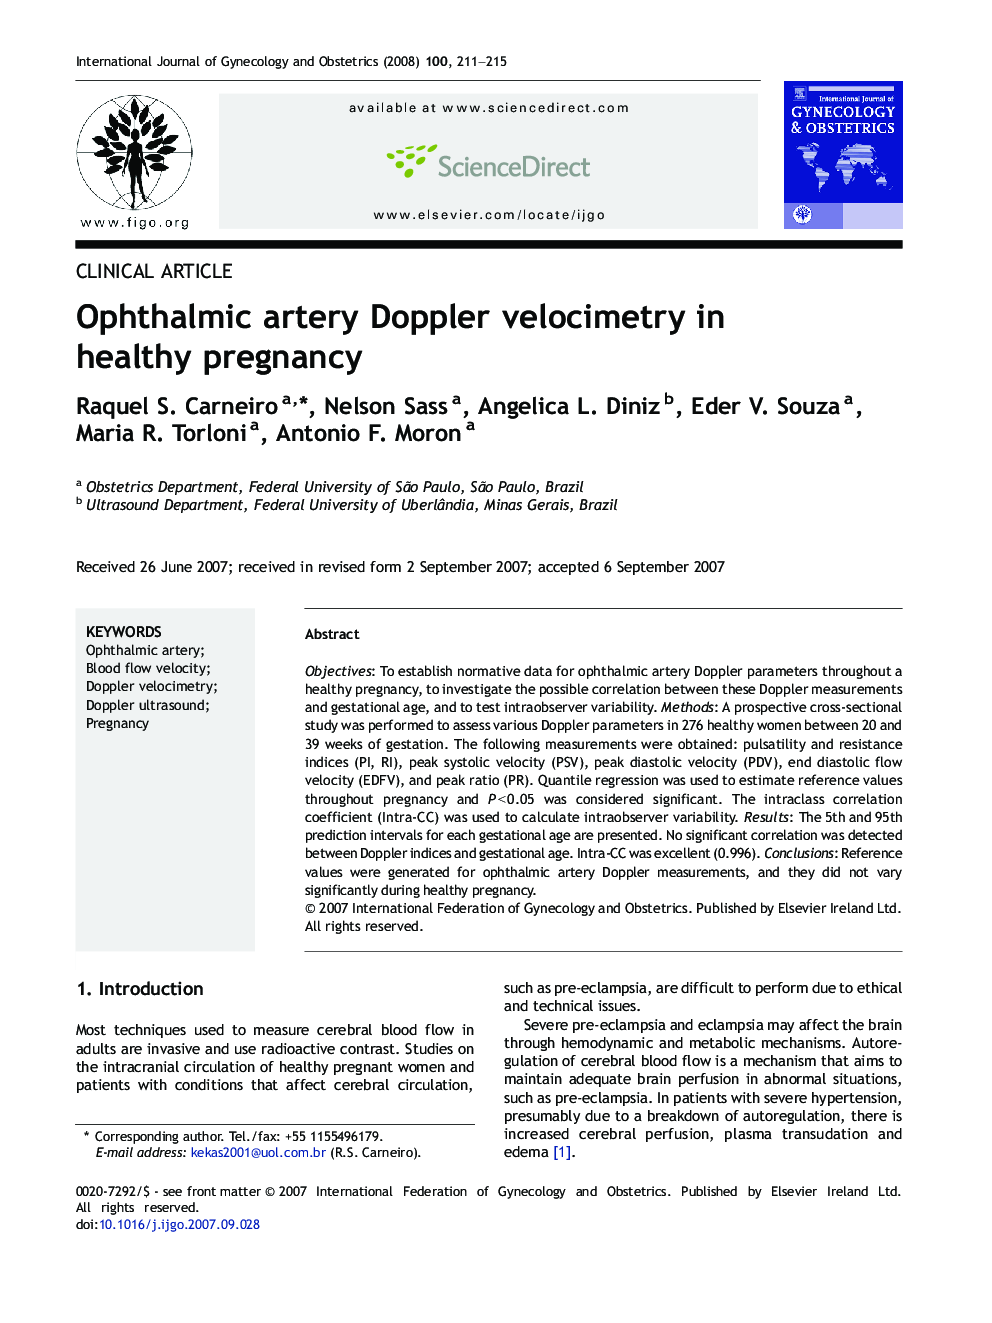 Ophthalmic artery Doppler velocimetry in healthy pregnancy